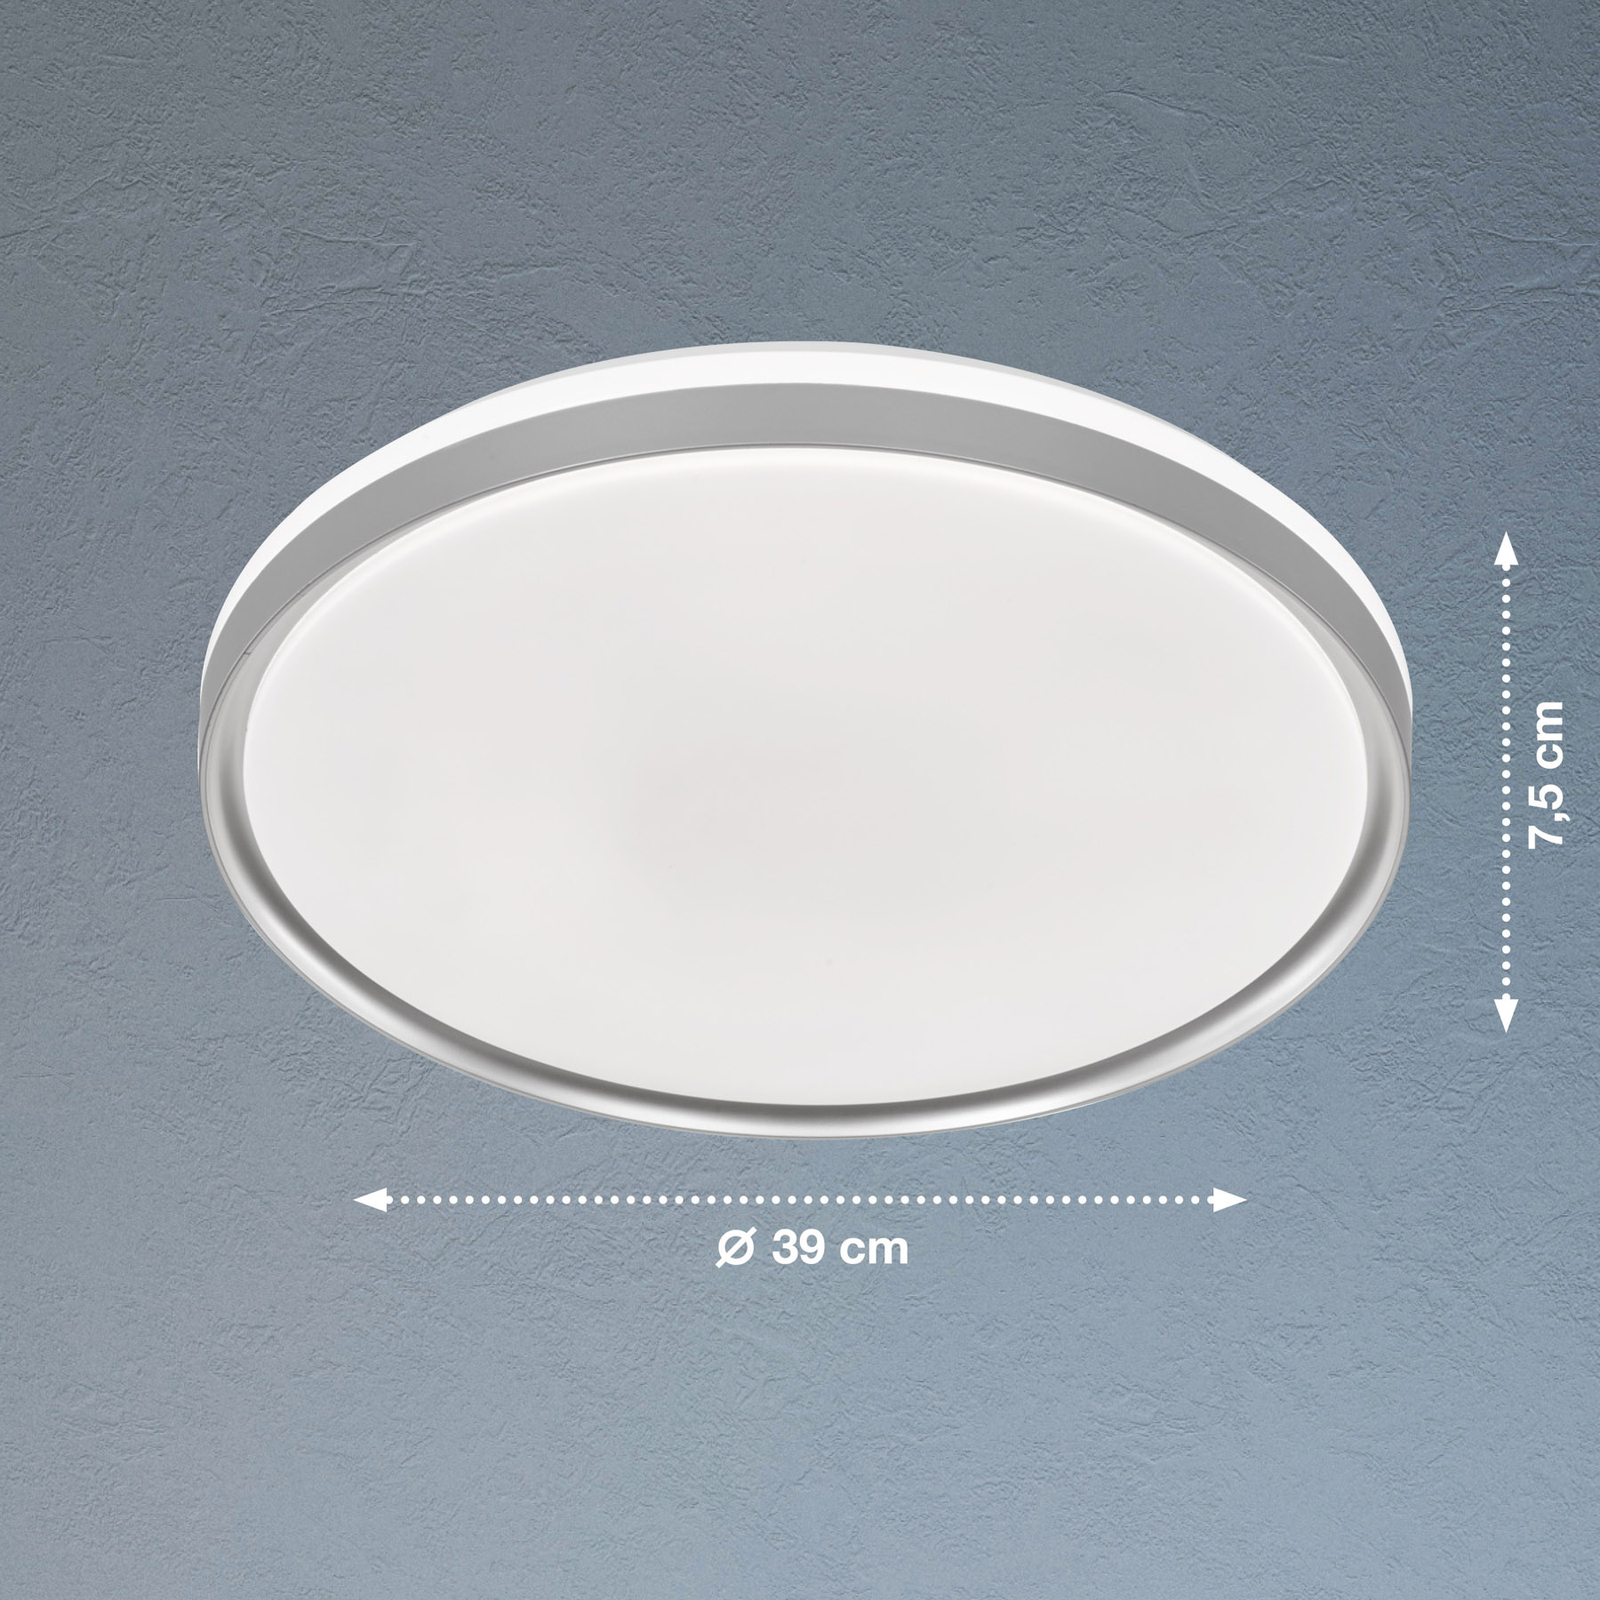 Stropné LED svietidlo Jaso BS, Ø 39 cm, striebro